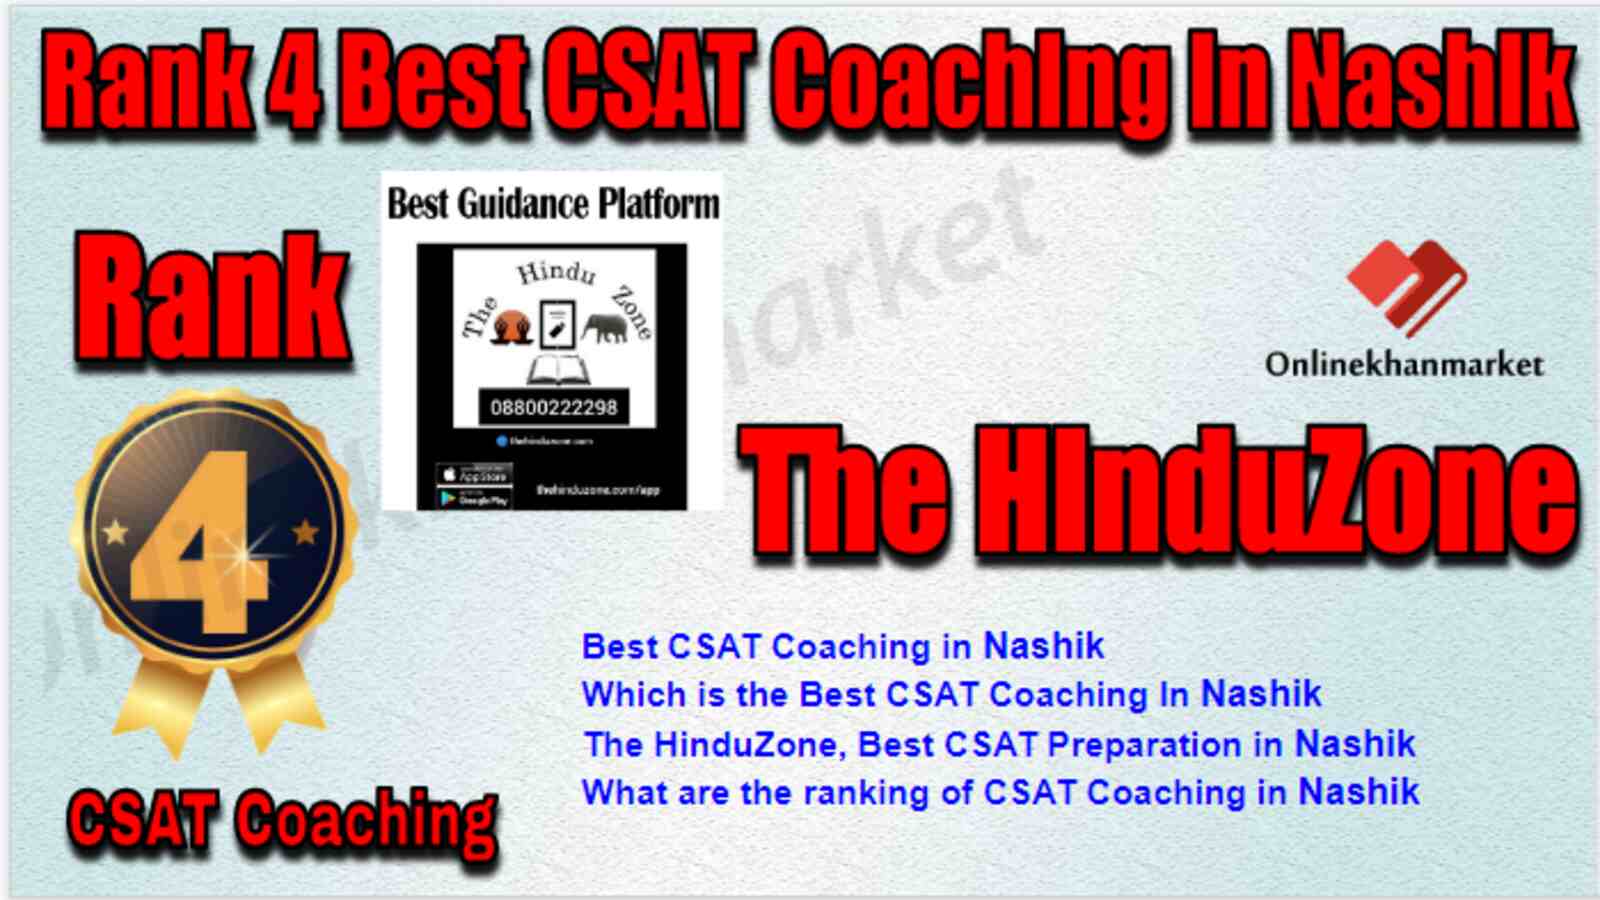 Rank 4 Best CSAT Coaching in Nashik